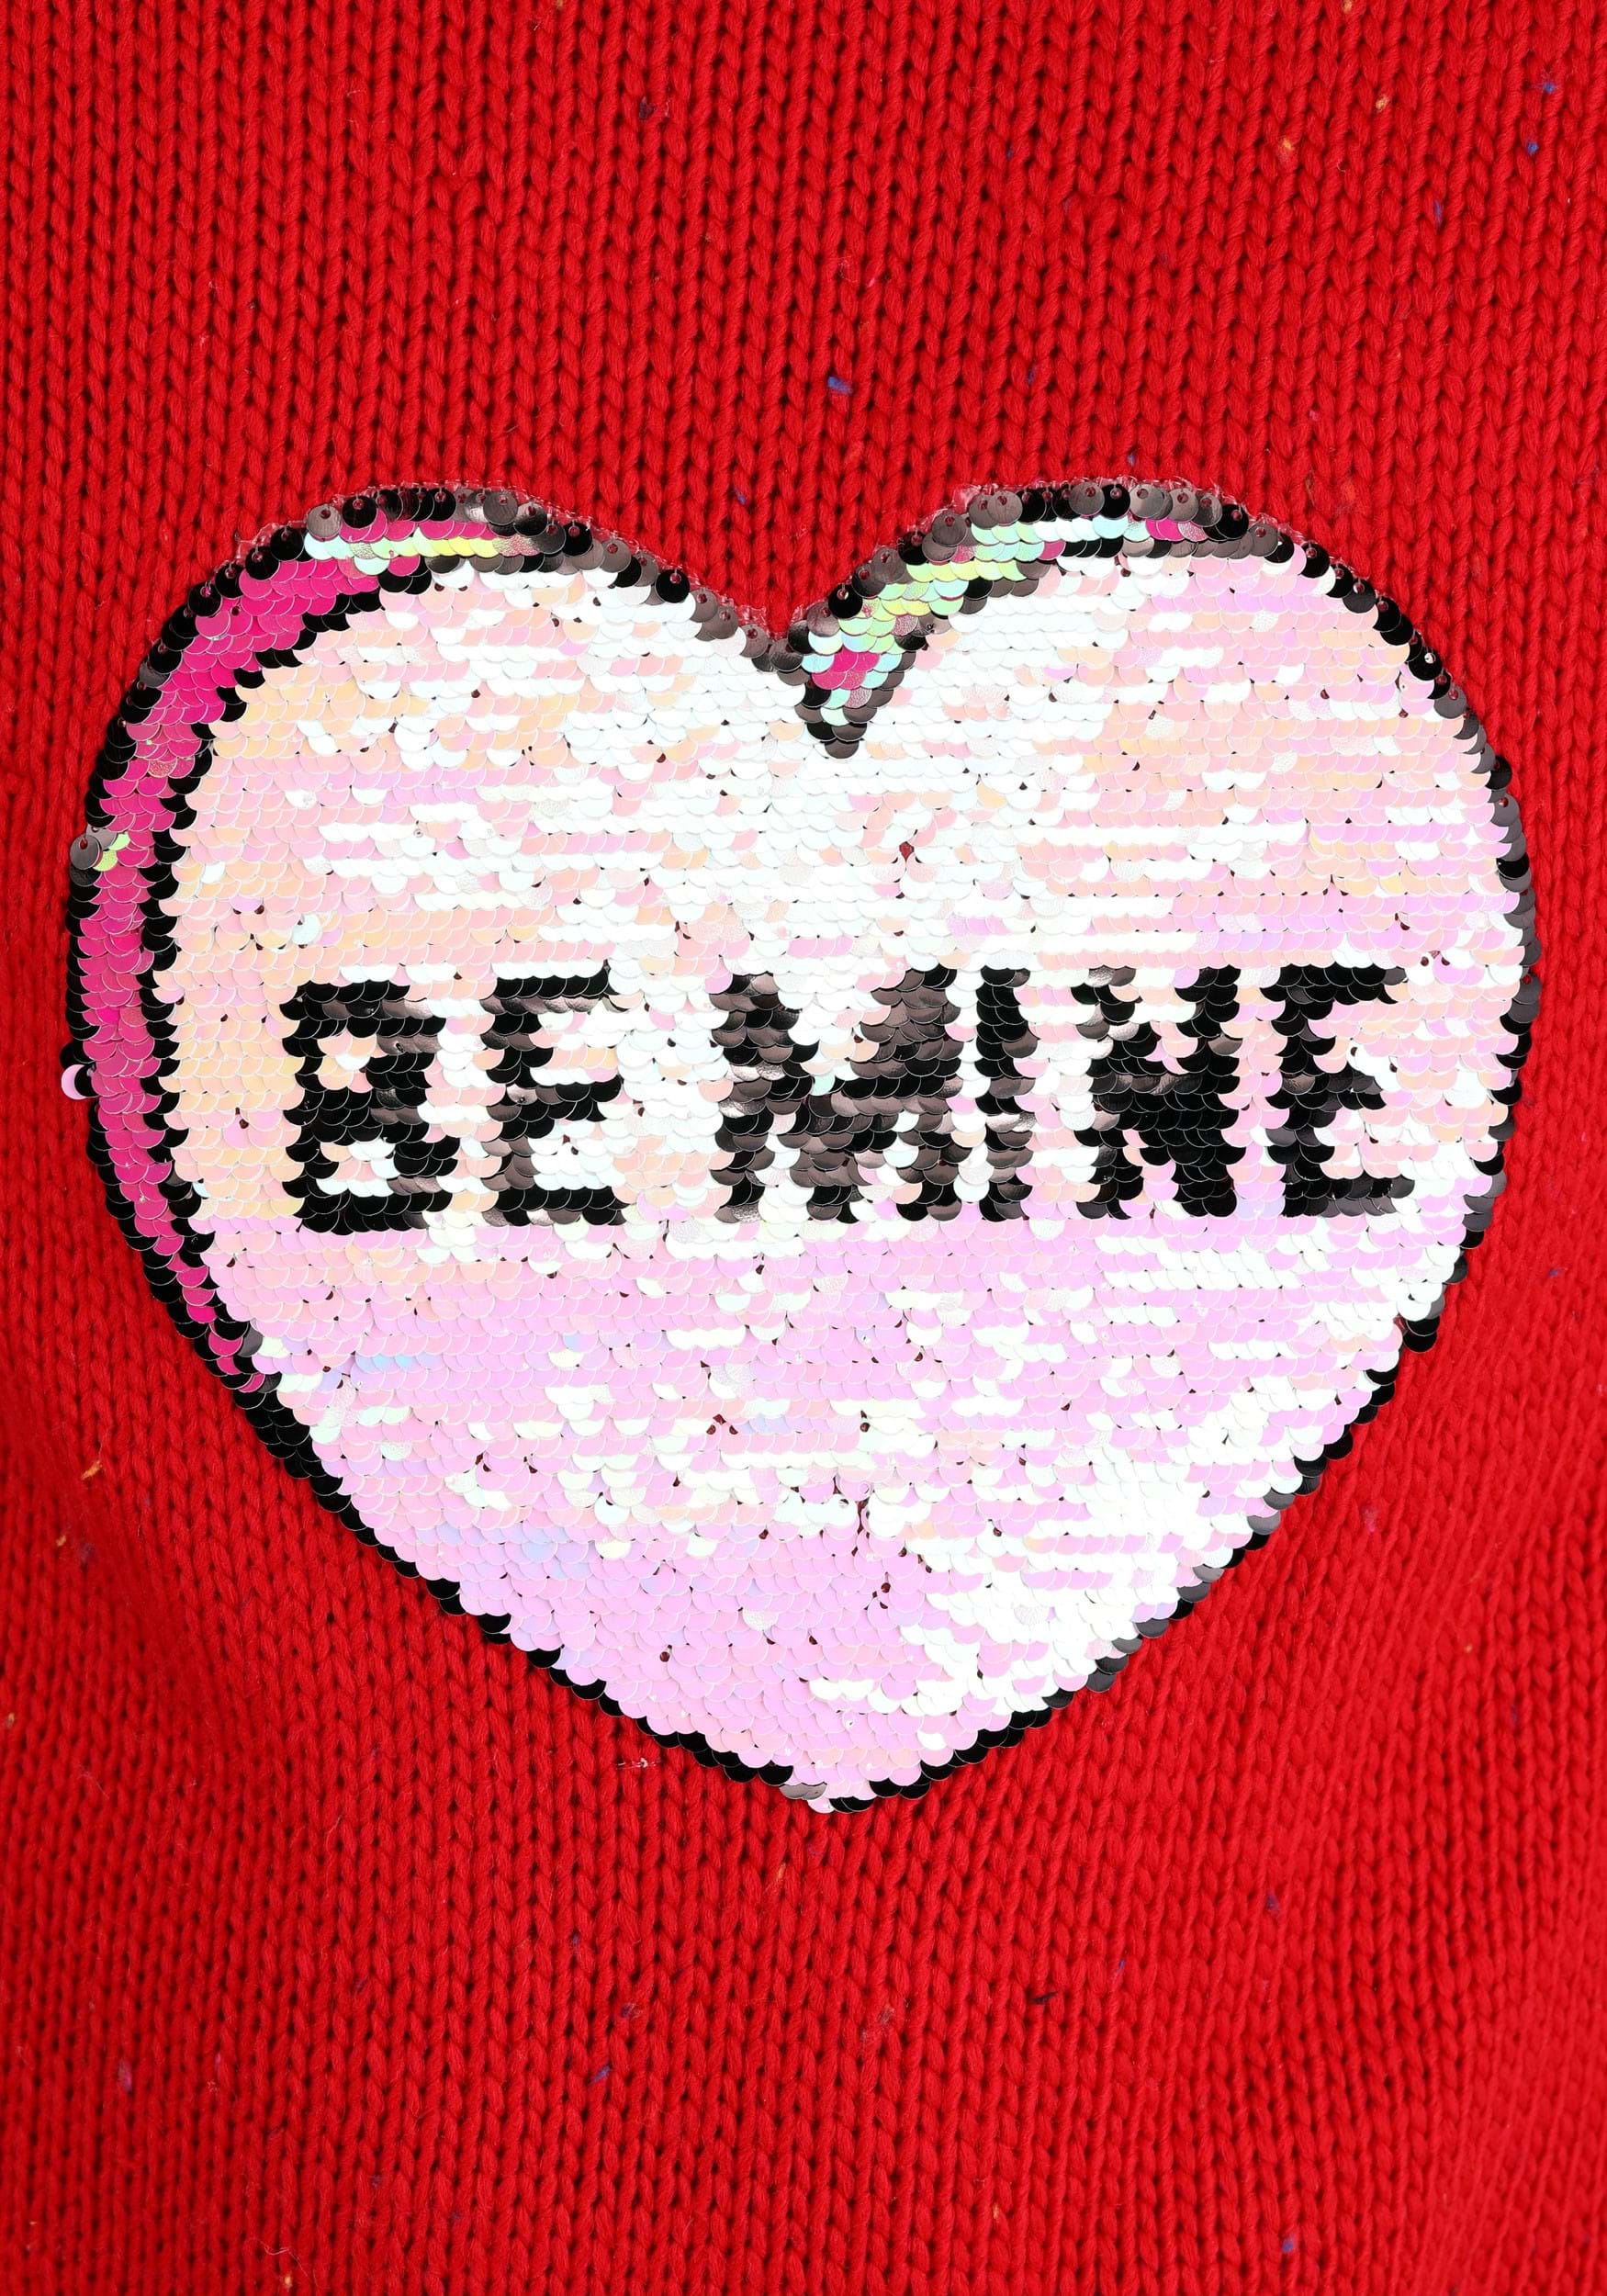 Adult Valentine's Day Be Mine Sweater